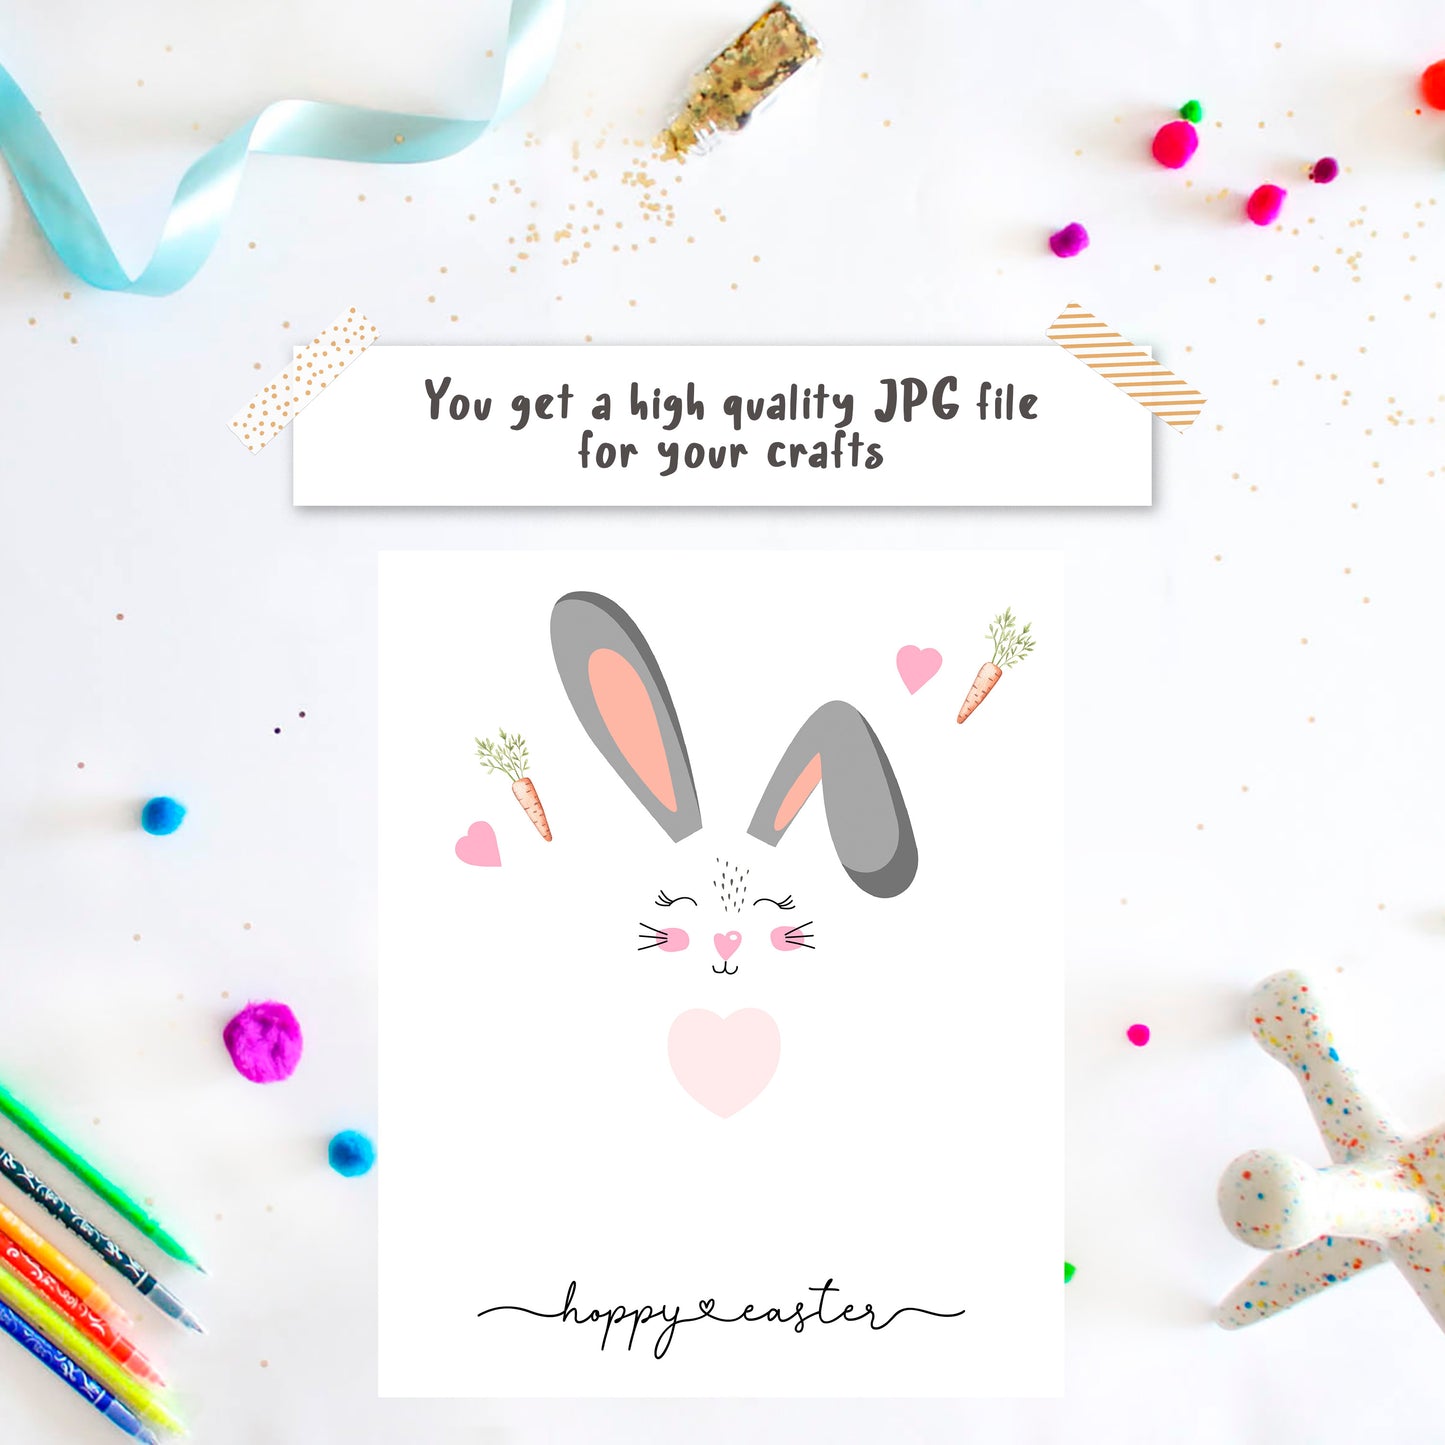 Hoppy Easter - Bunny Footprint Art